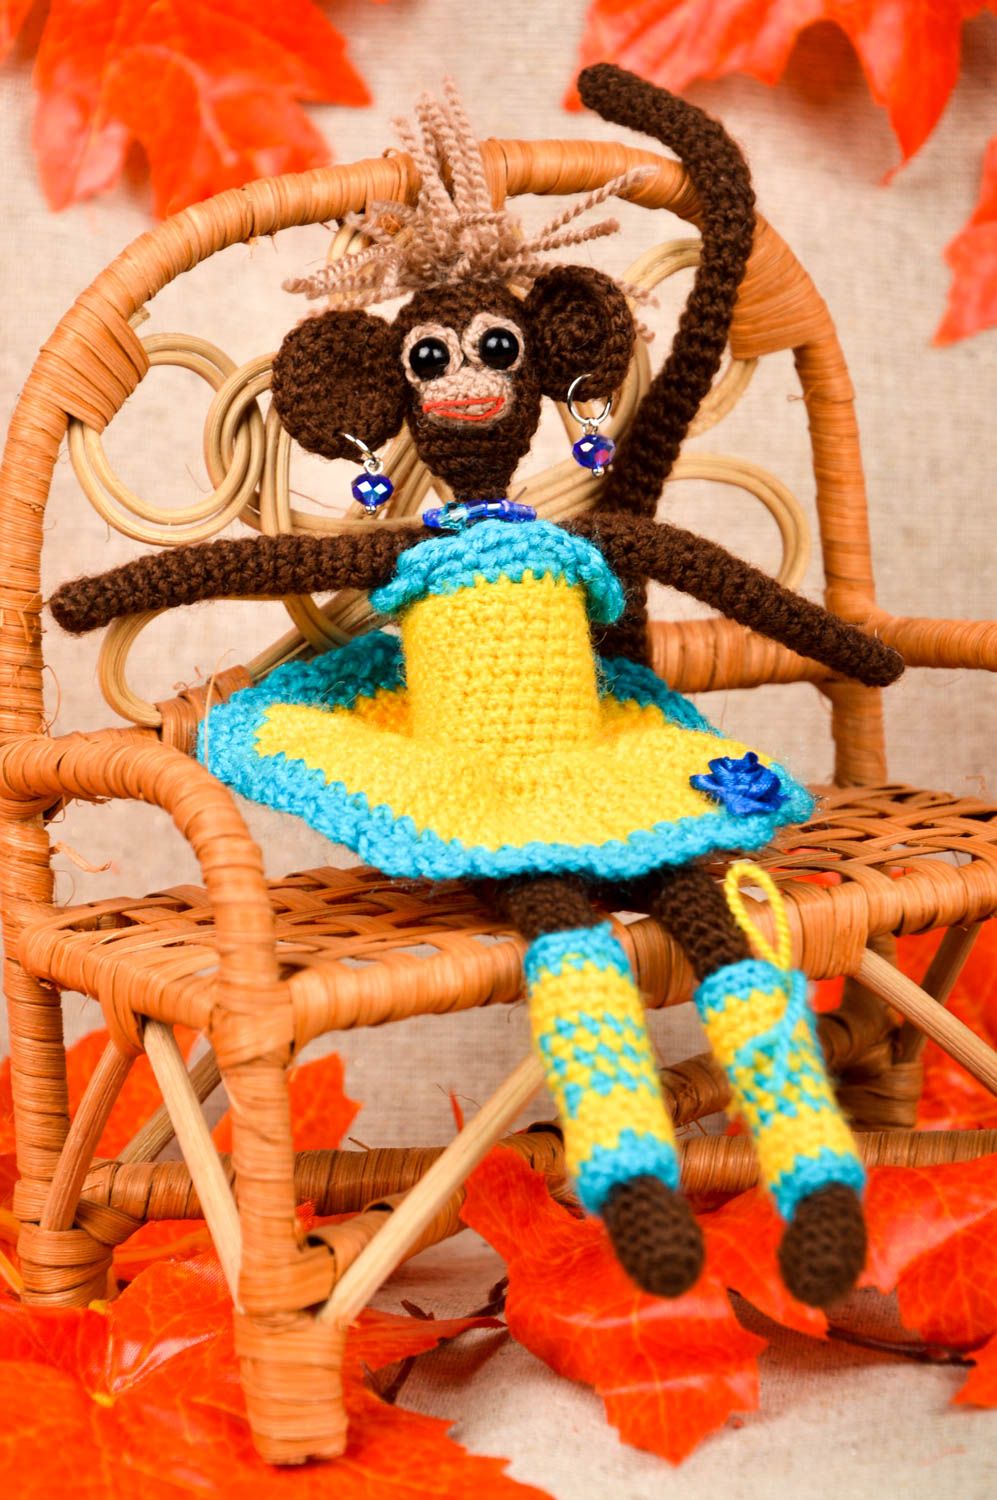 Hand-crocheted creative toy handmade trendy toy for babies nursery decor photo 1